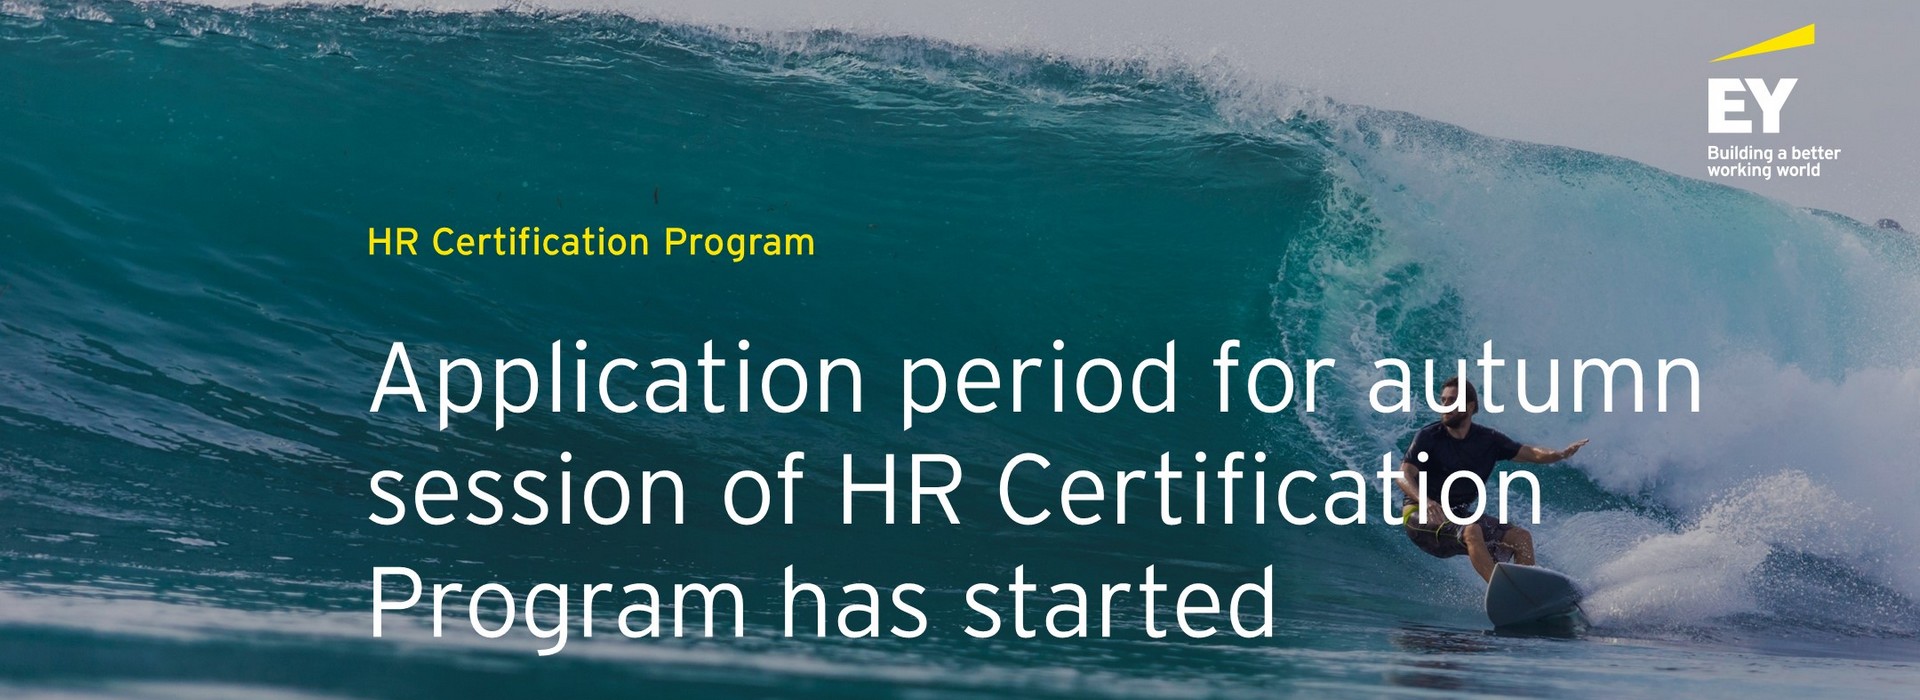 Autumn Session of HR Certification Program